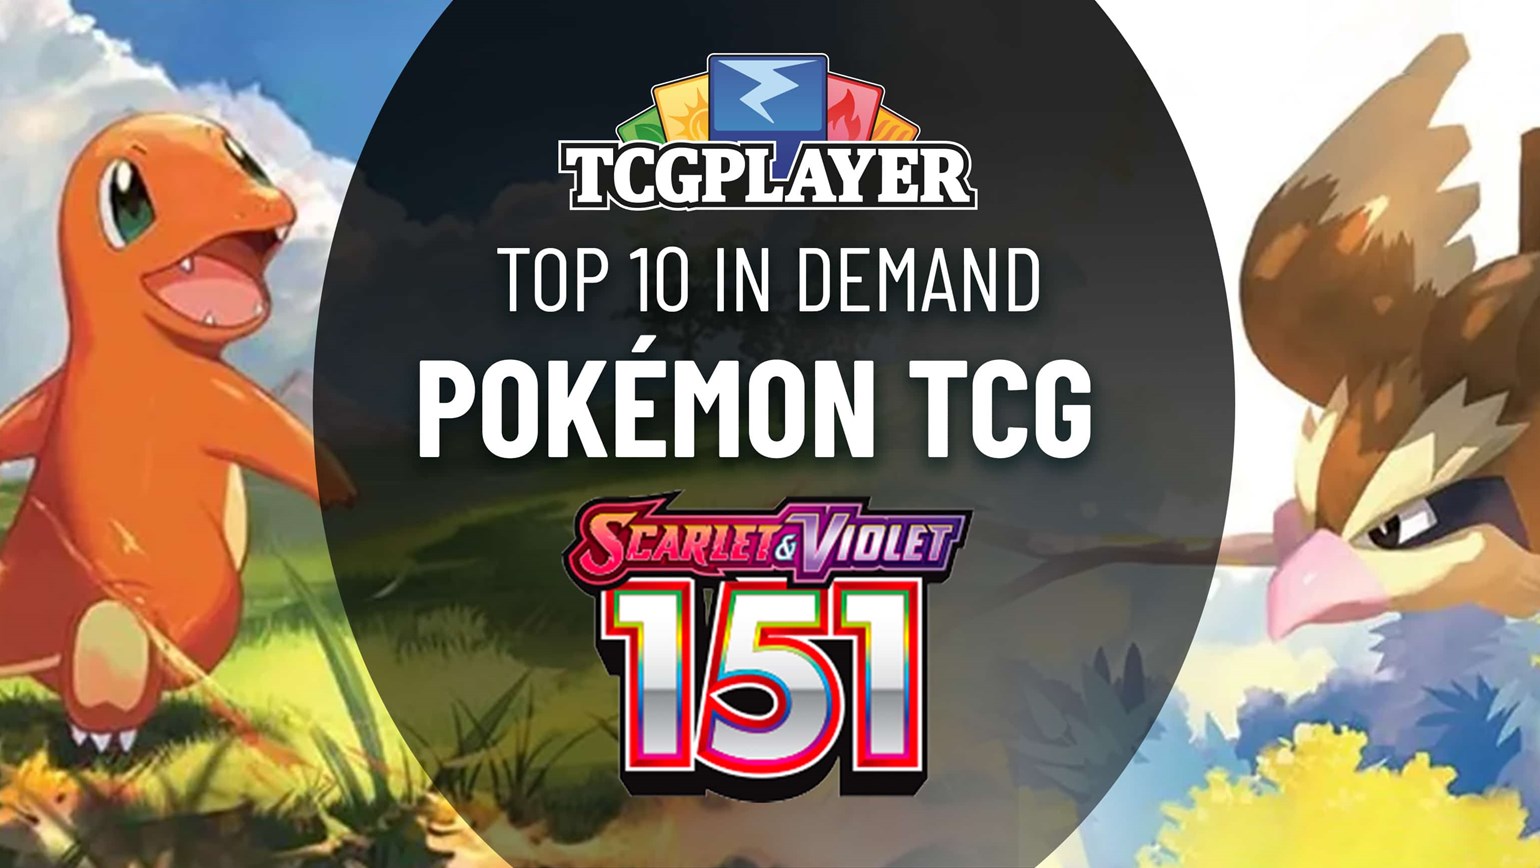 Top 10 In Demand ​​Pokémon TCG: Scarlet & Violet—151